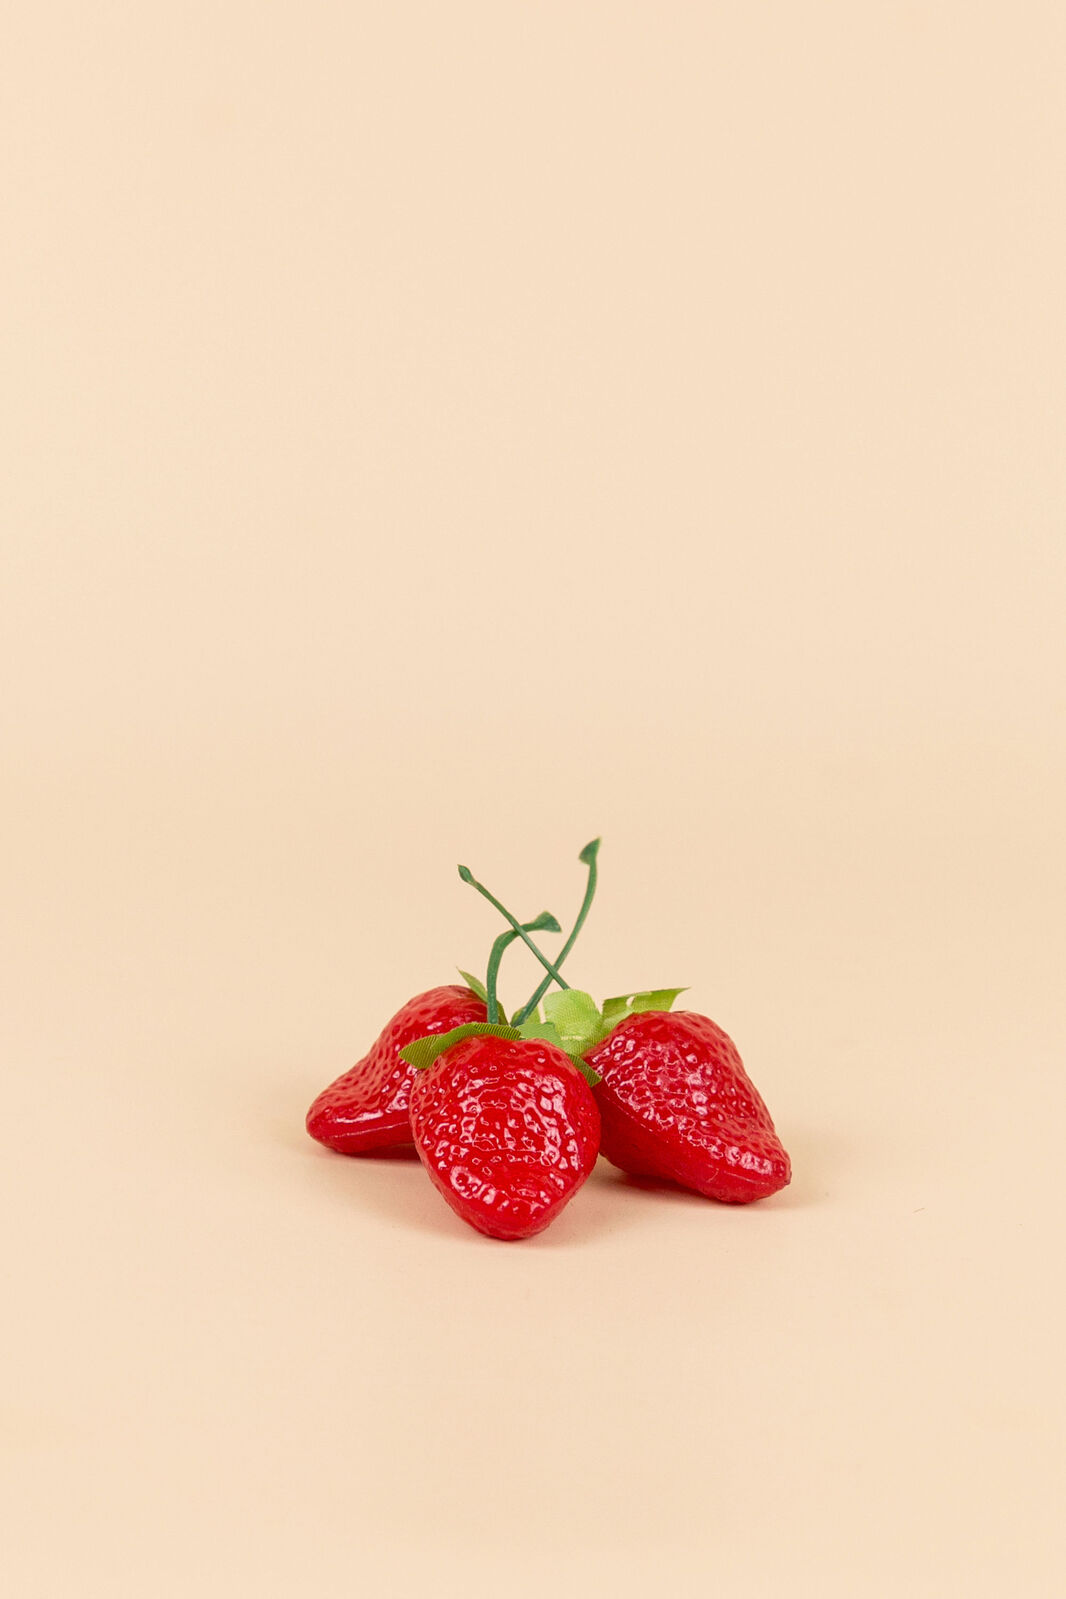 Strawberry YK0018-RED